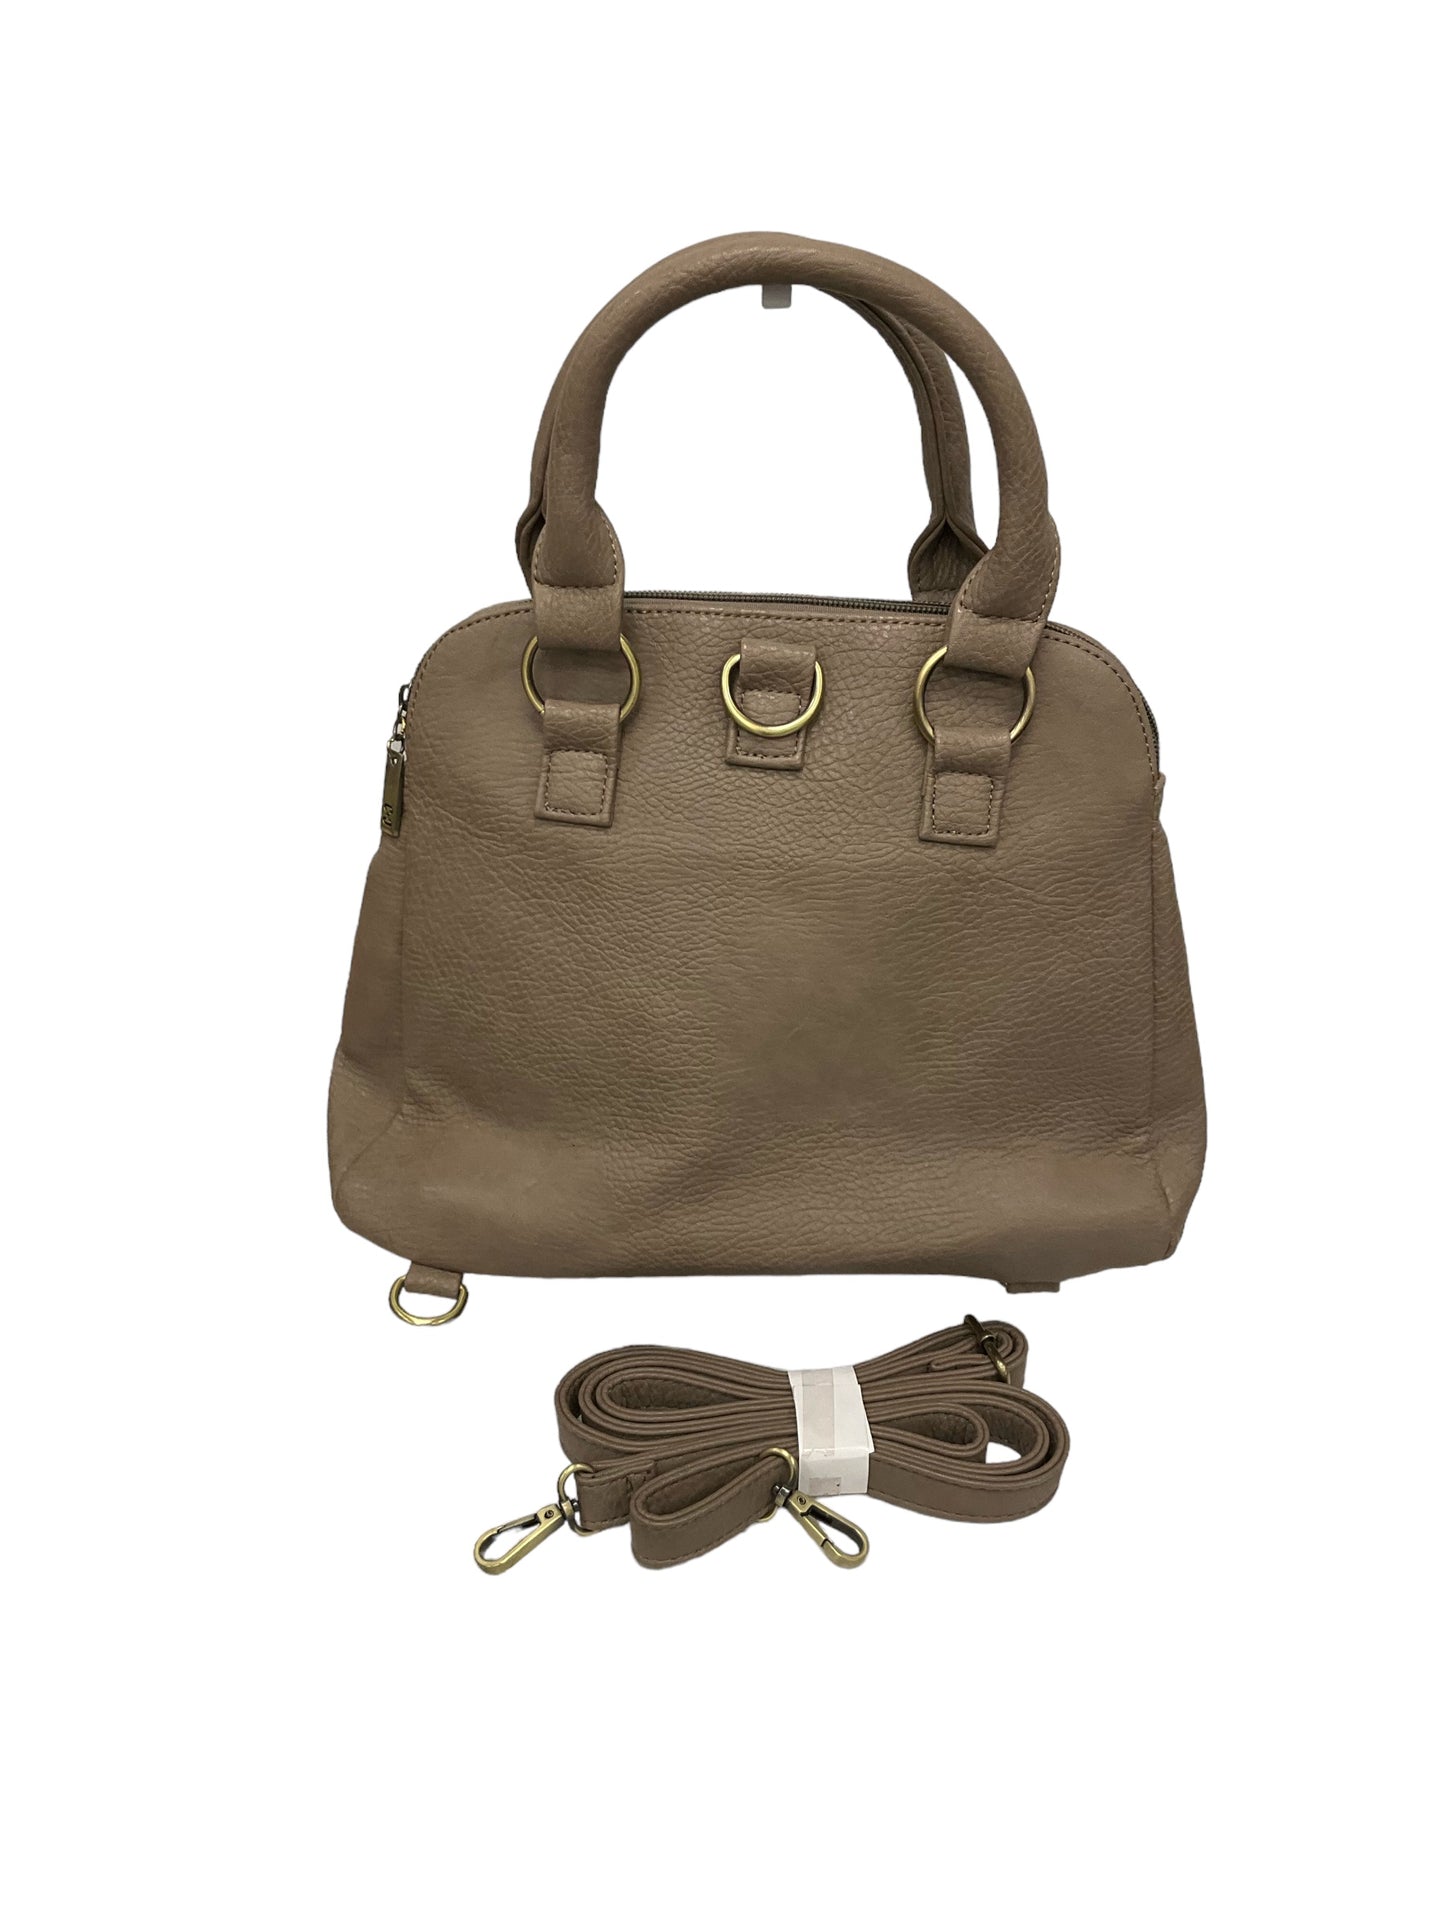 Handbag By Coco And Carmen  Size: Medium